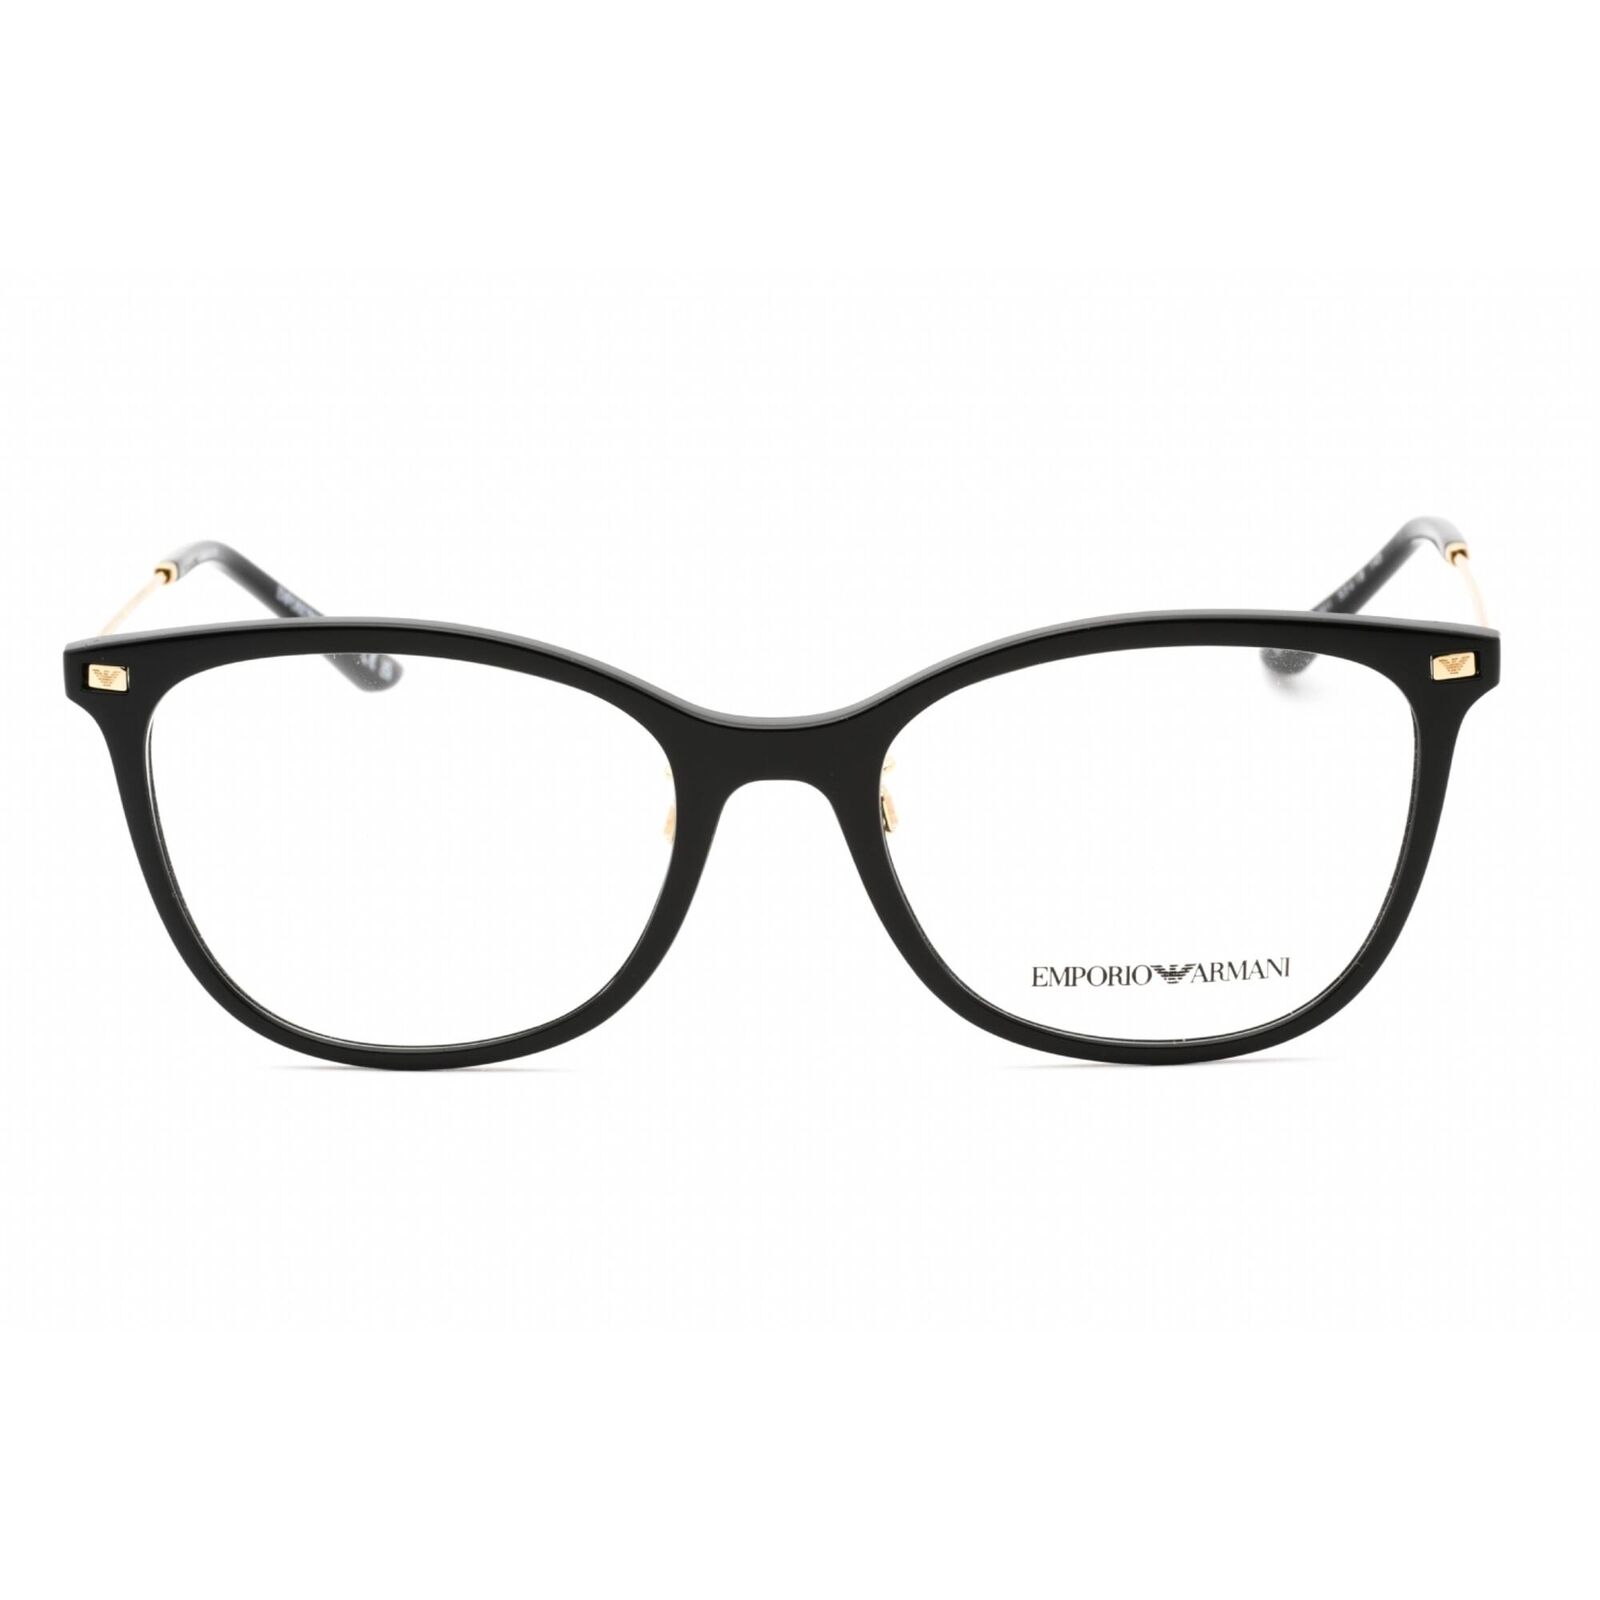 Emporio Armani Women's Eyeglasses Black Full Rim Rectangular Frame 0EA3199 5001 Emporio Armani 0EA3199 5001 - фотография #2